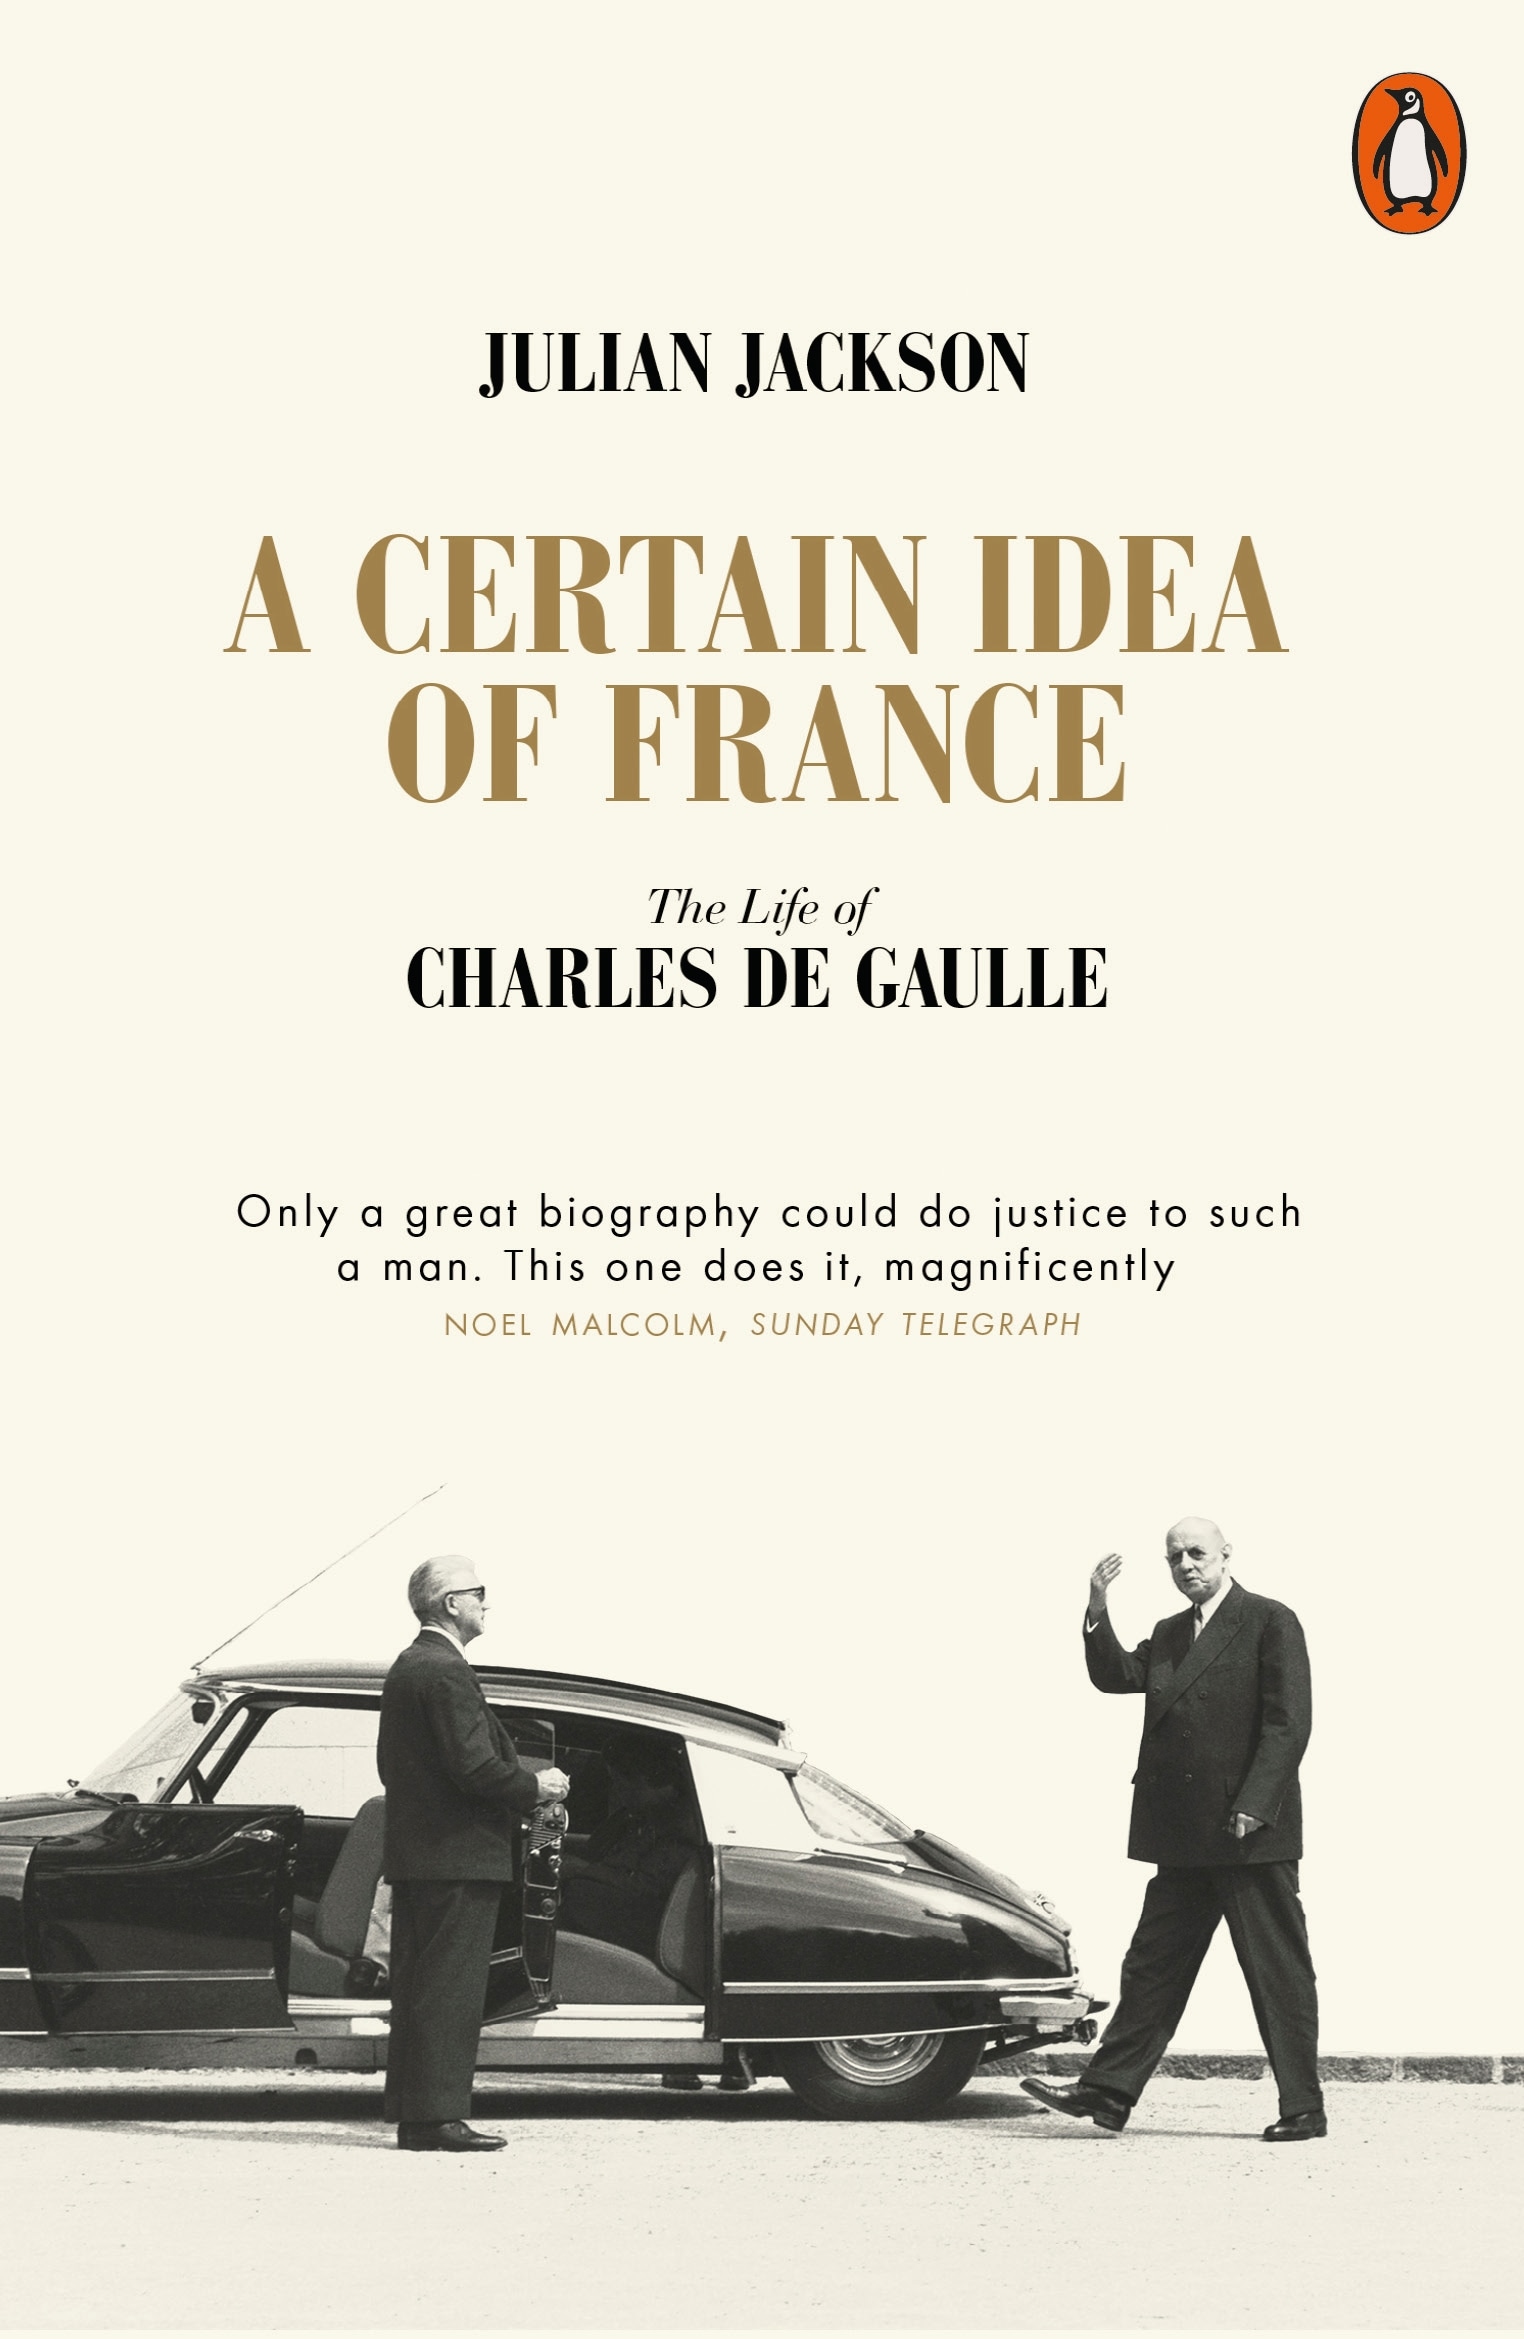 Book “A Certain Idea of France” by Julian Jackson — July 4, 2019